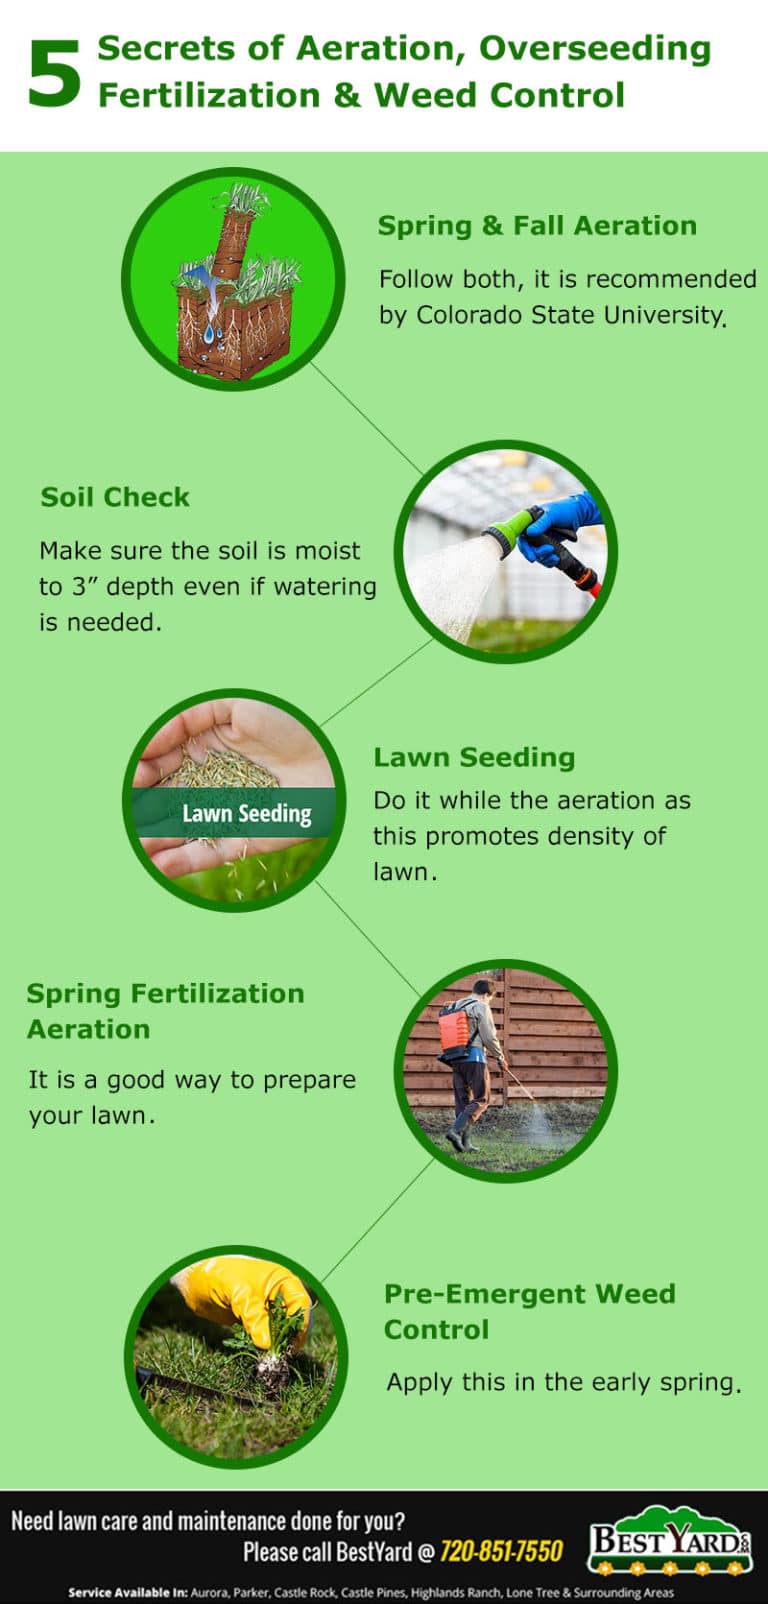 5 Secrets of Aeration, Overseeding, Fertilization & Weed Control